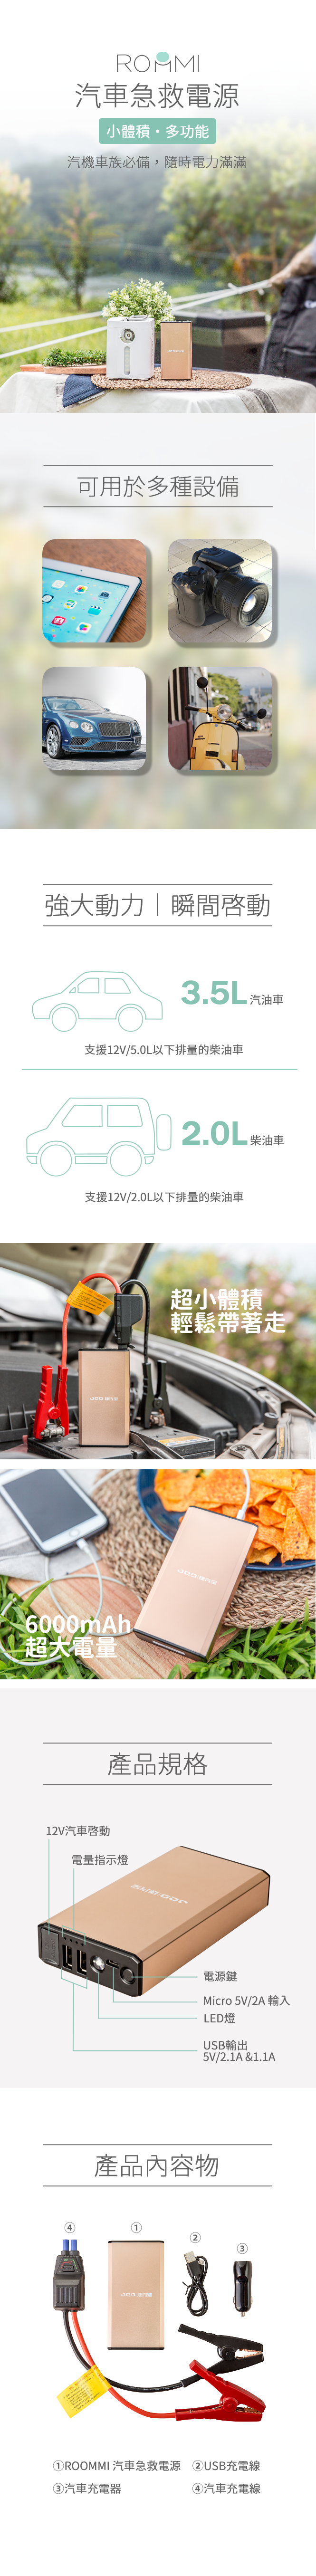 【Roommi】小型汽車急救電源+60W太陽能板 車用充電器 電源救援器